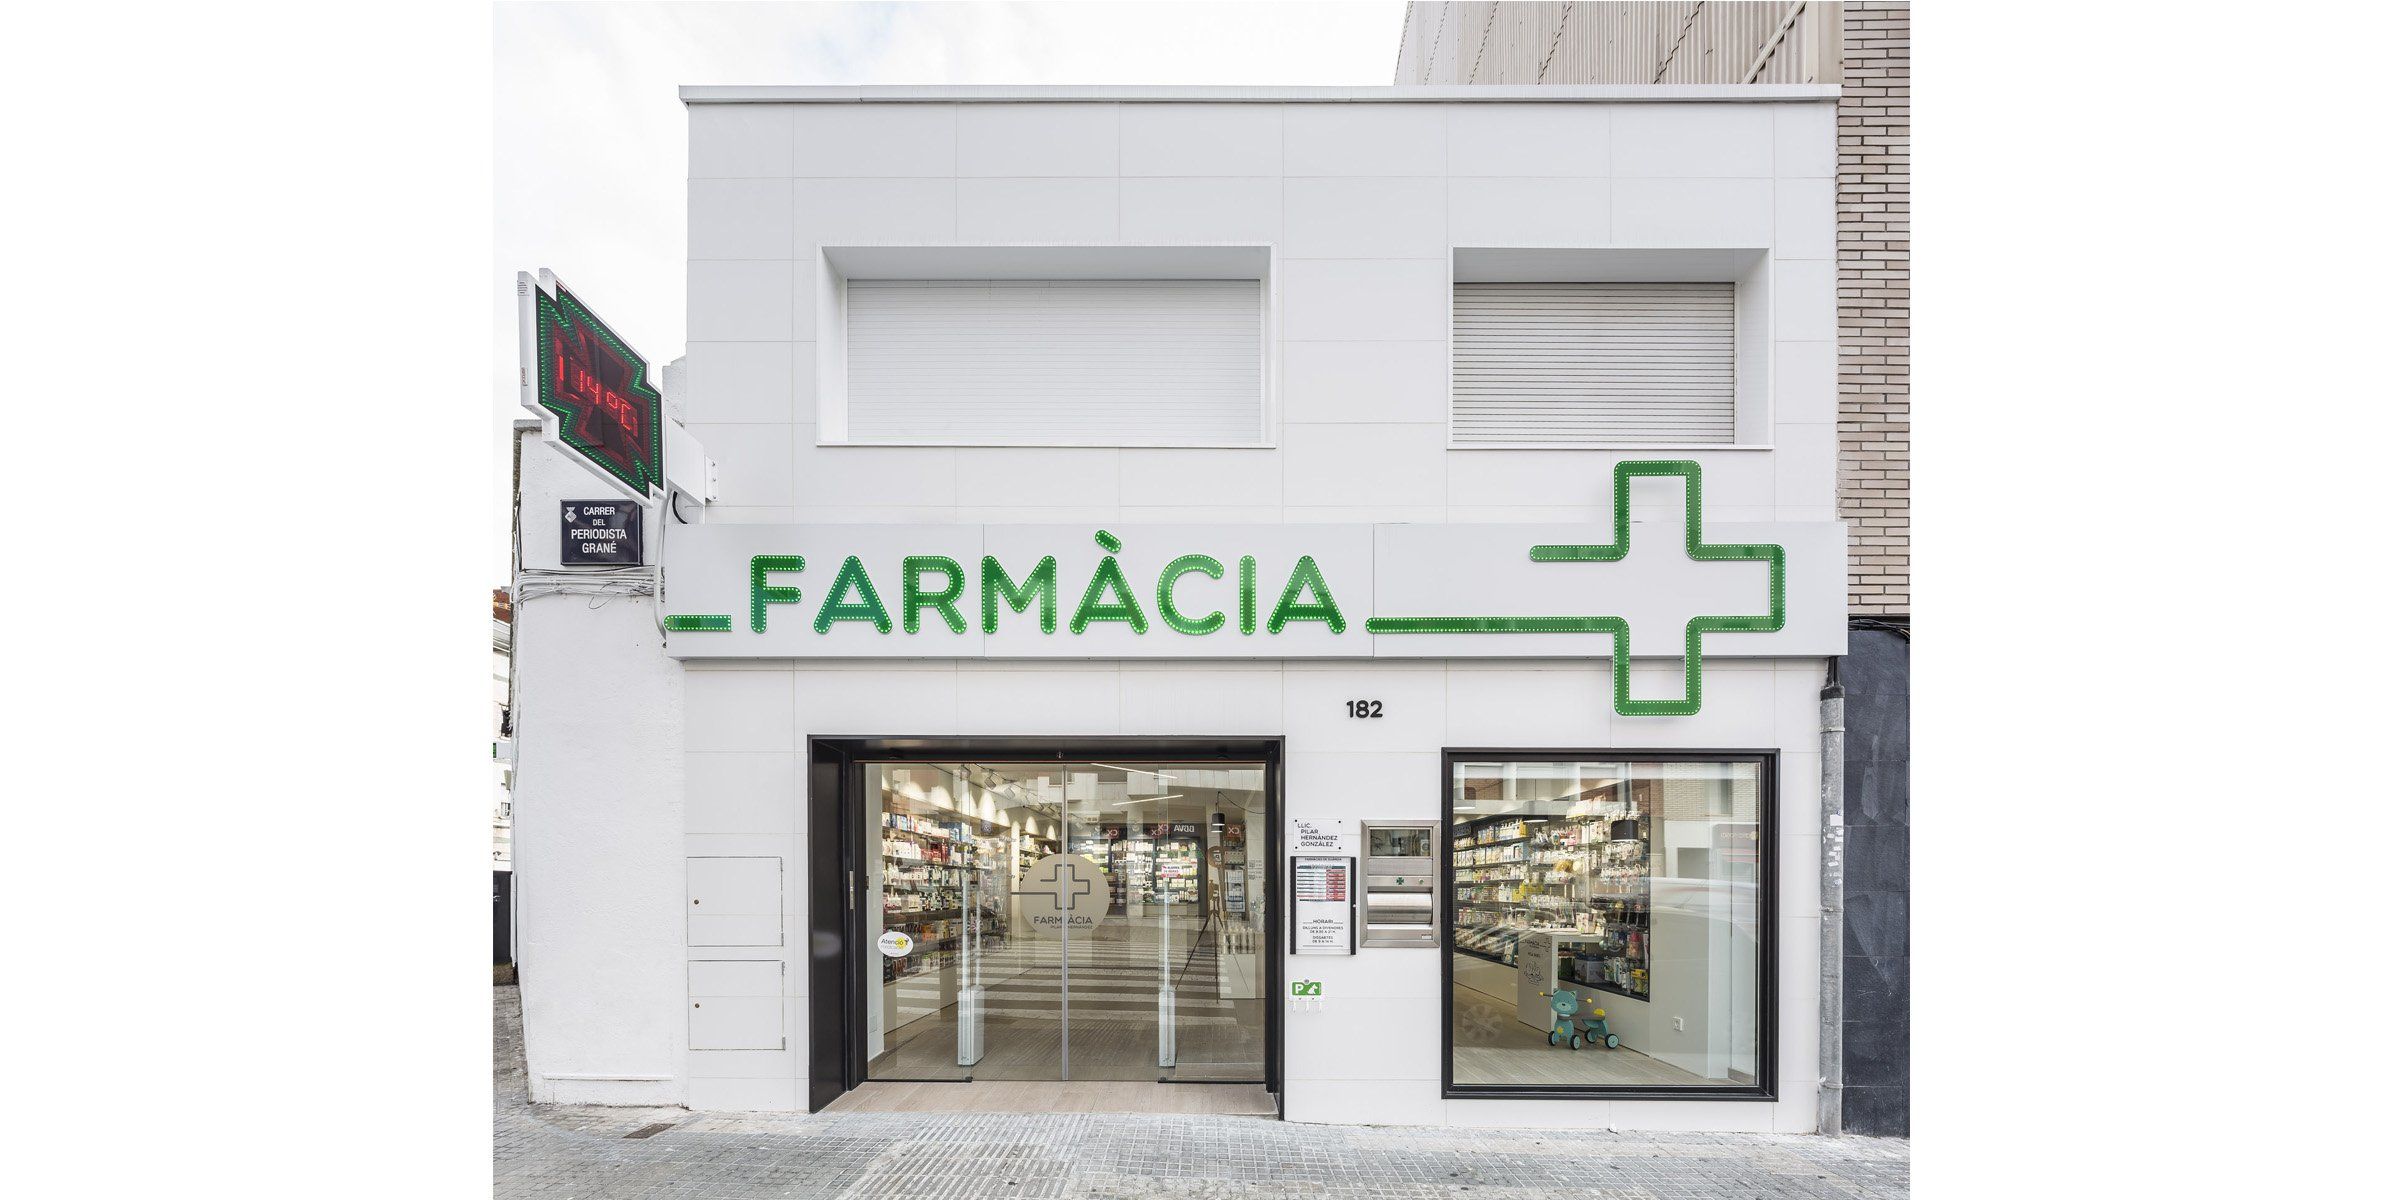 Farmacia Pilar HernándezTerrassa, Barcelona